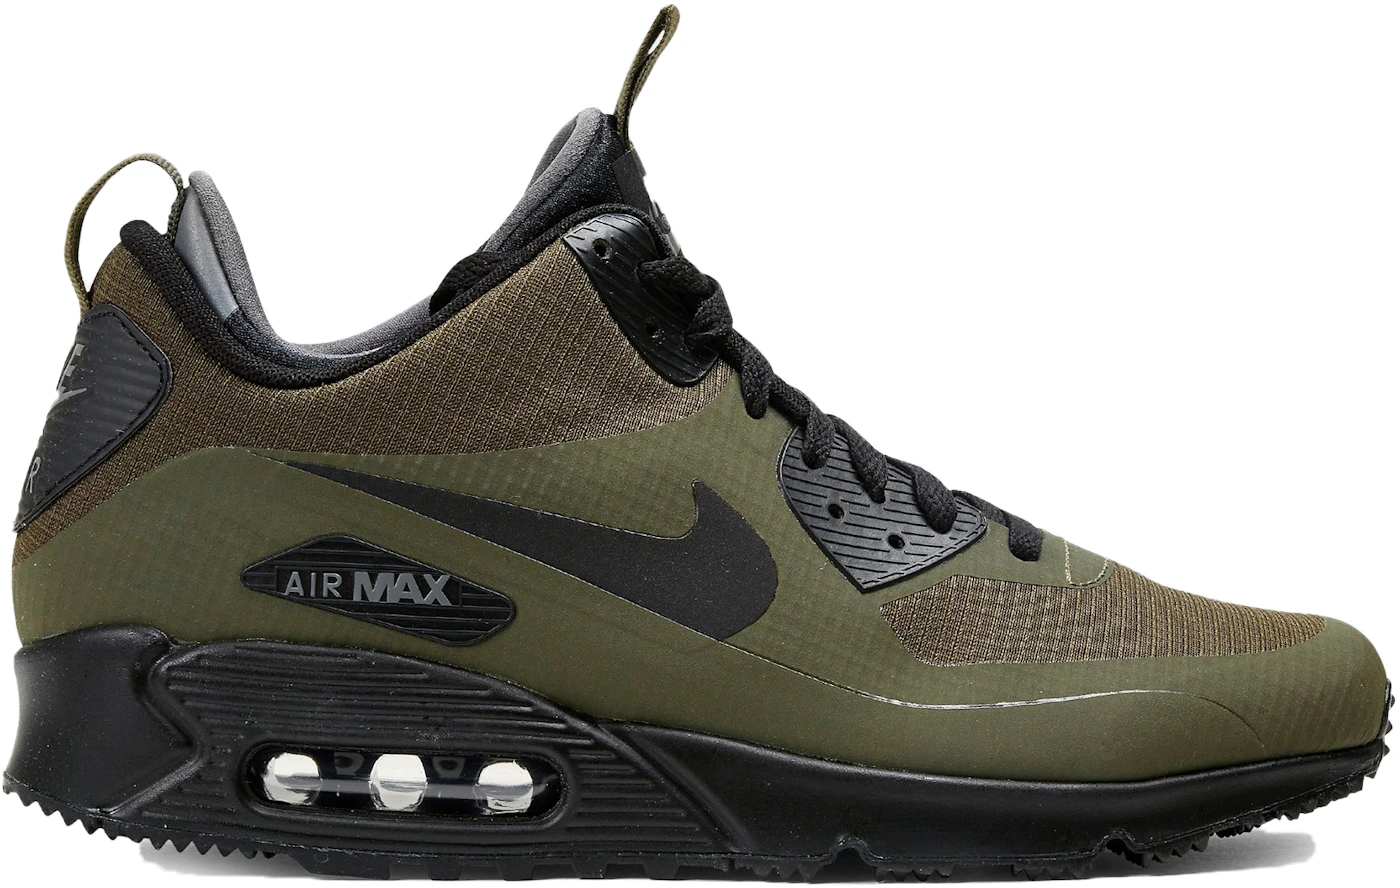 Nike Air Max Winter Mid Loden Men's - 806808-300 -